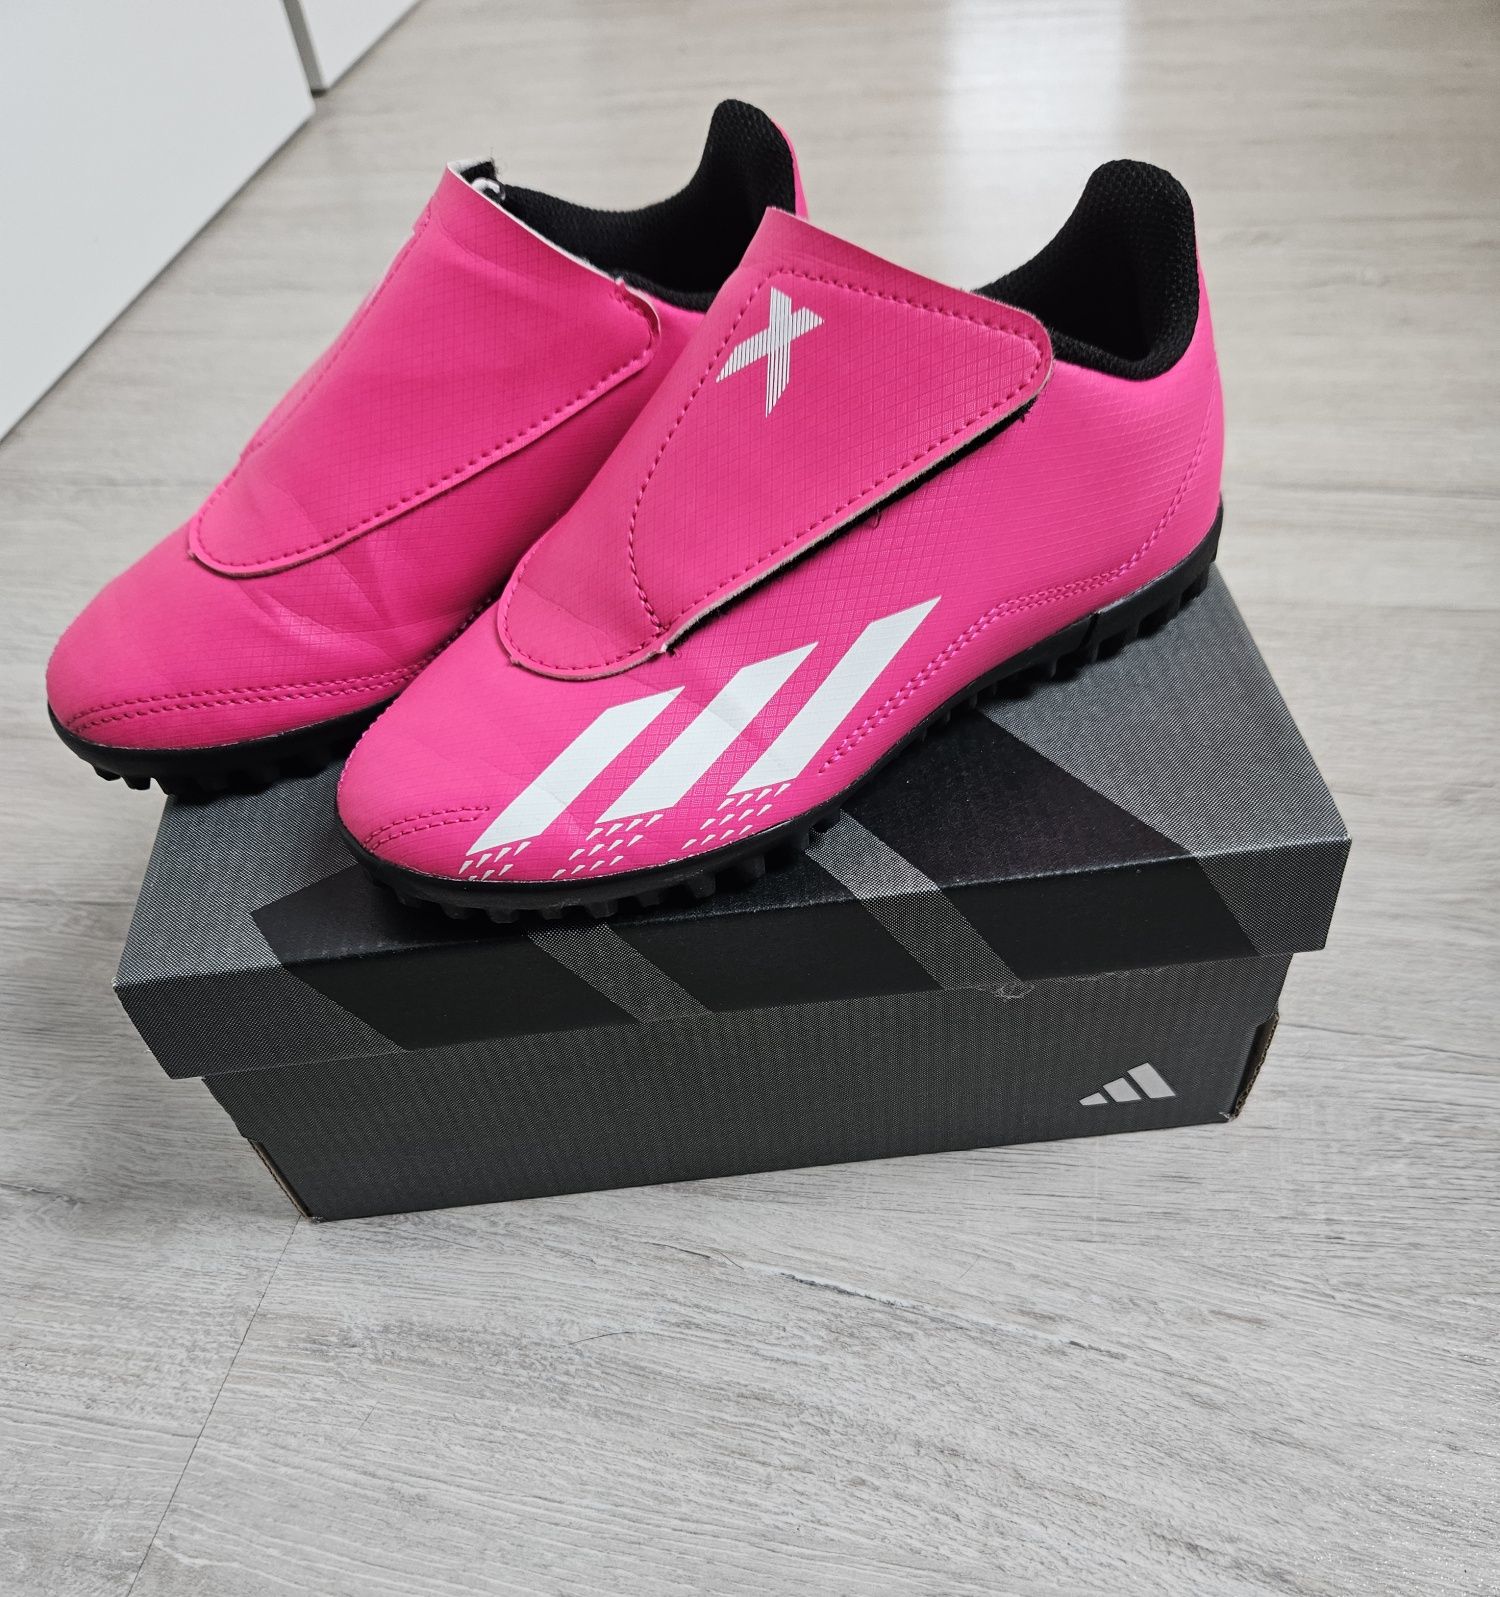 Buty piłkarskie Adidas r.31